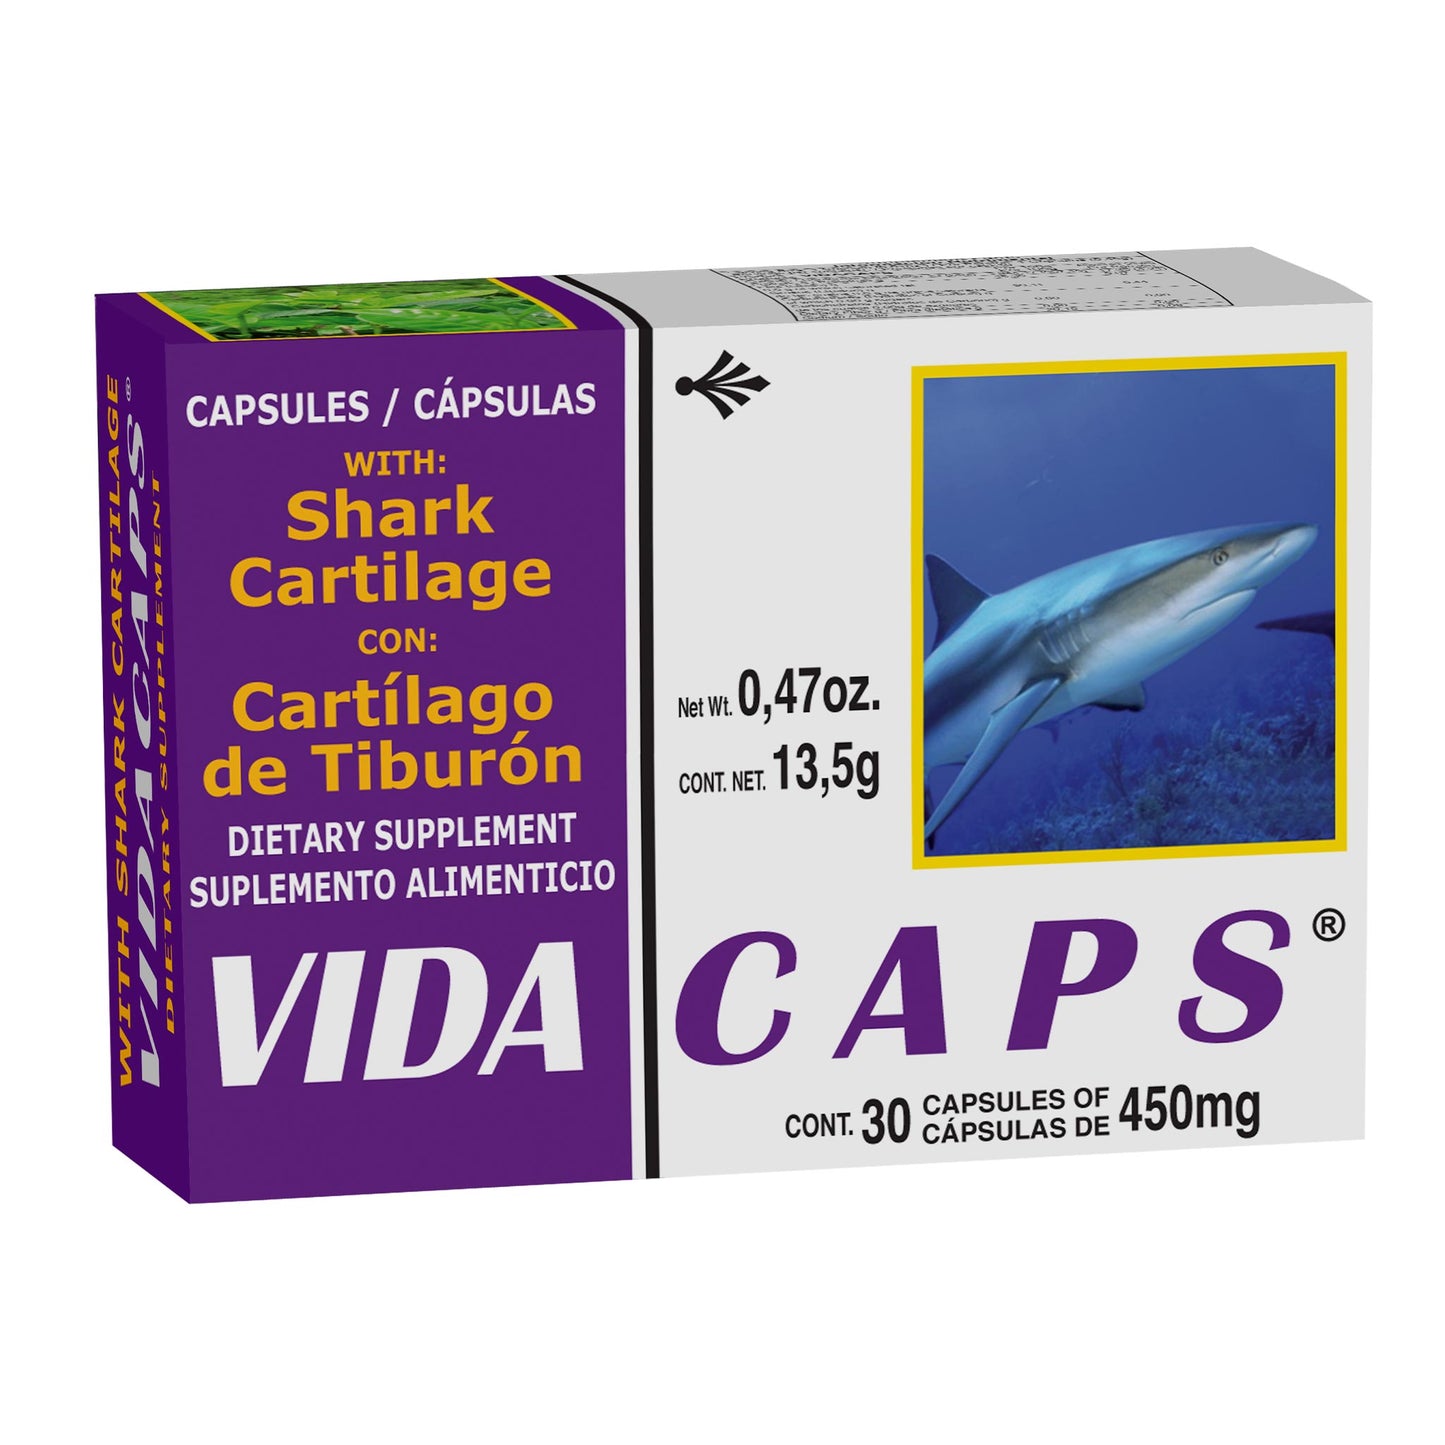 VIDACAPS ® 30 cápsulas